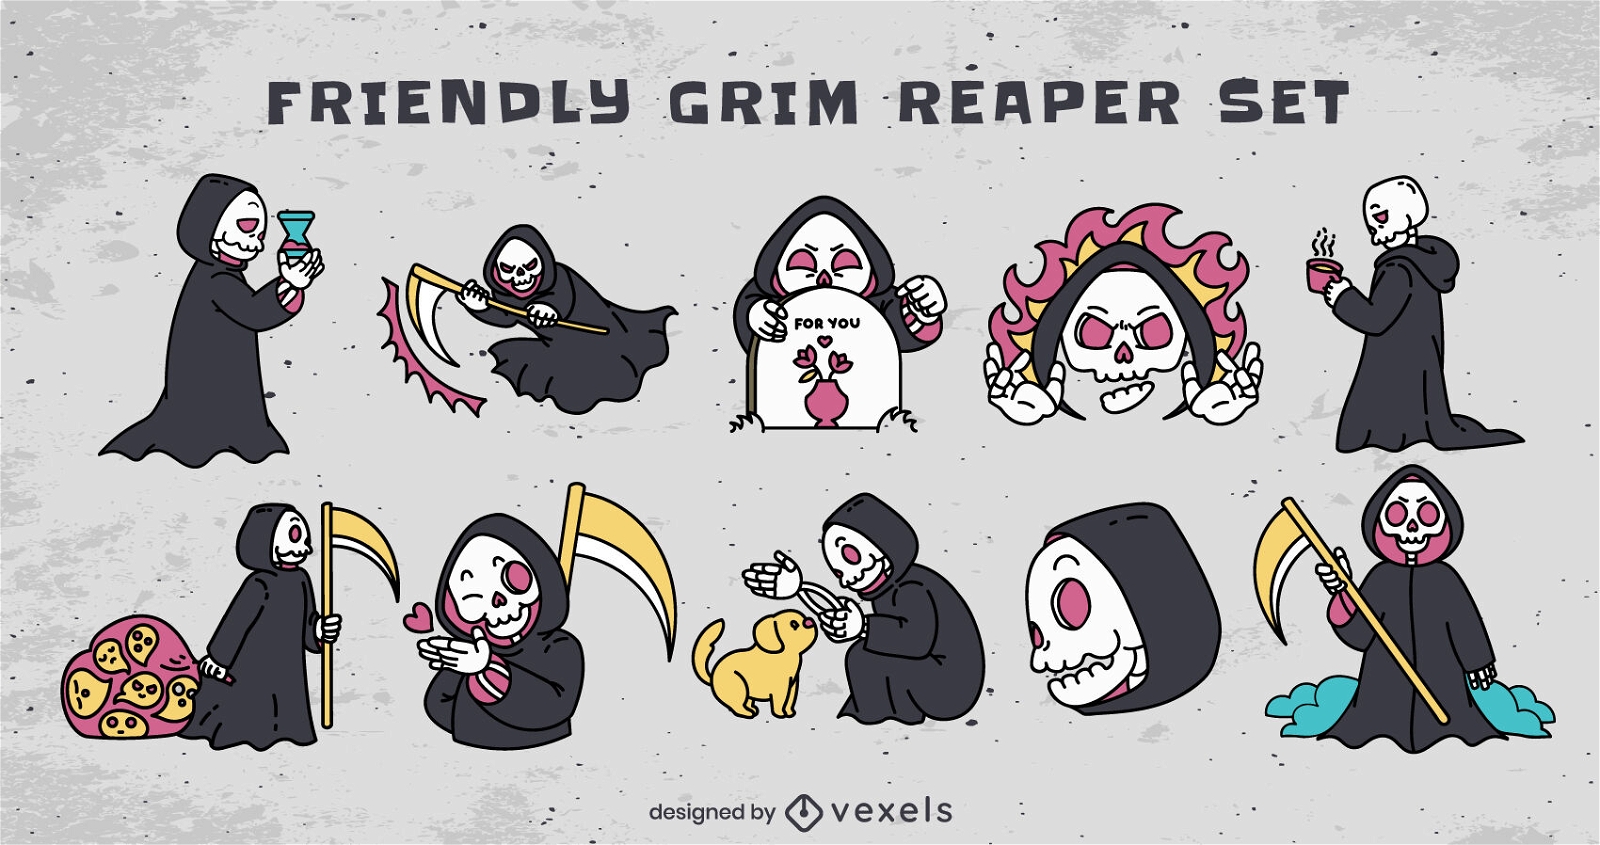 Friendly grim reaper character set